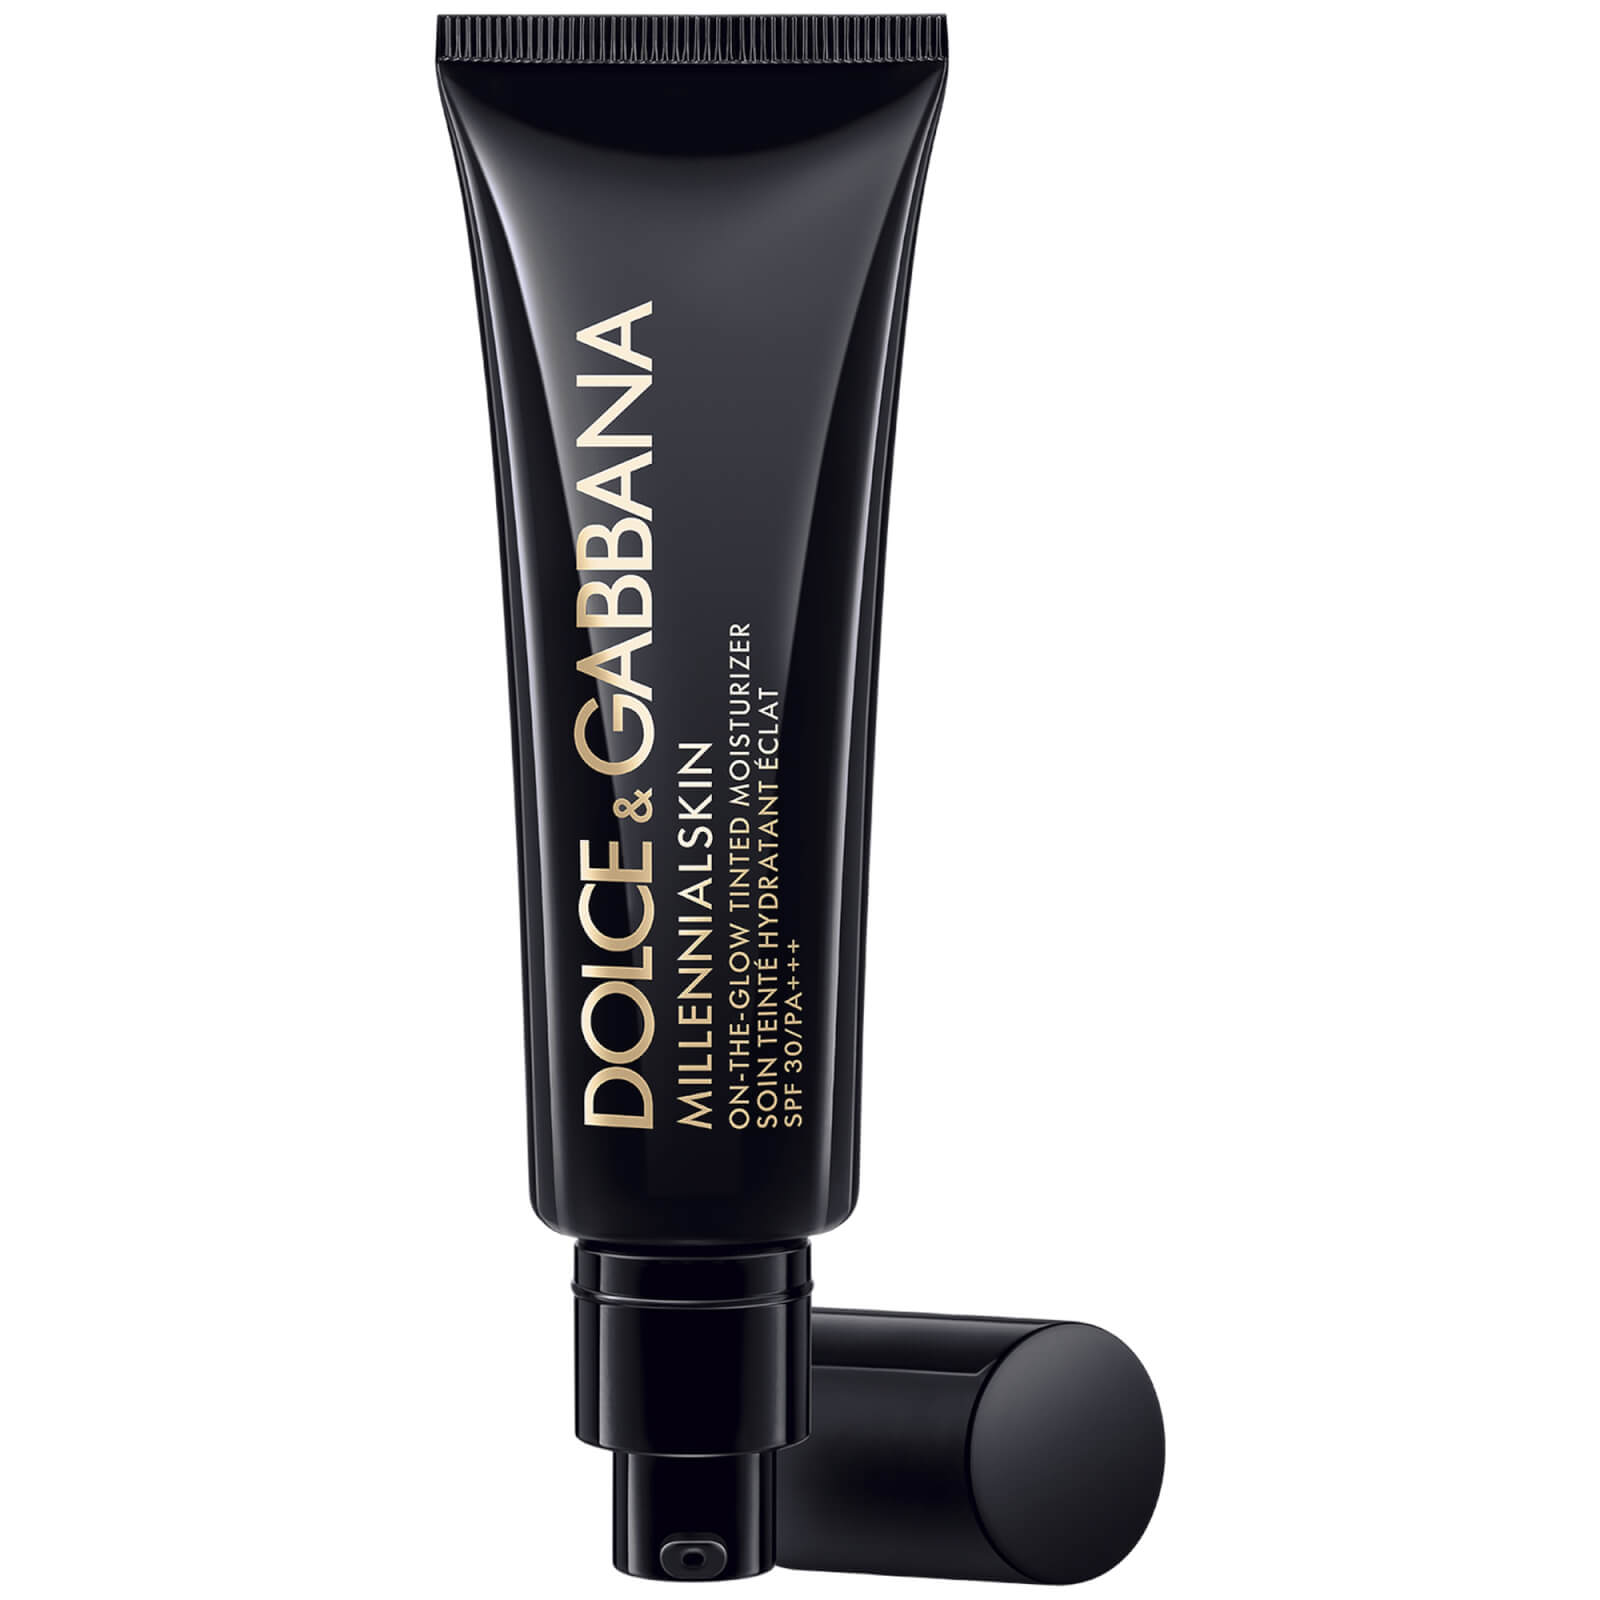 Dolce&Gabbana Millennialskin On-the-Glow Tinted Moisturiser 50ml (Various Shades) - 520 Almond